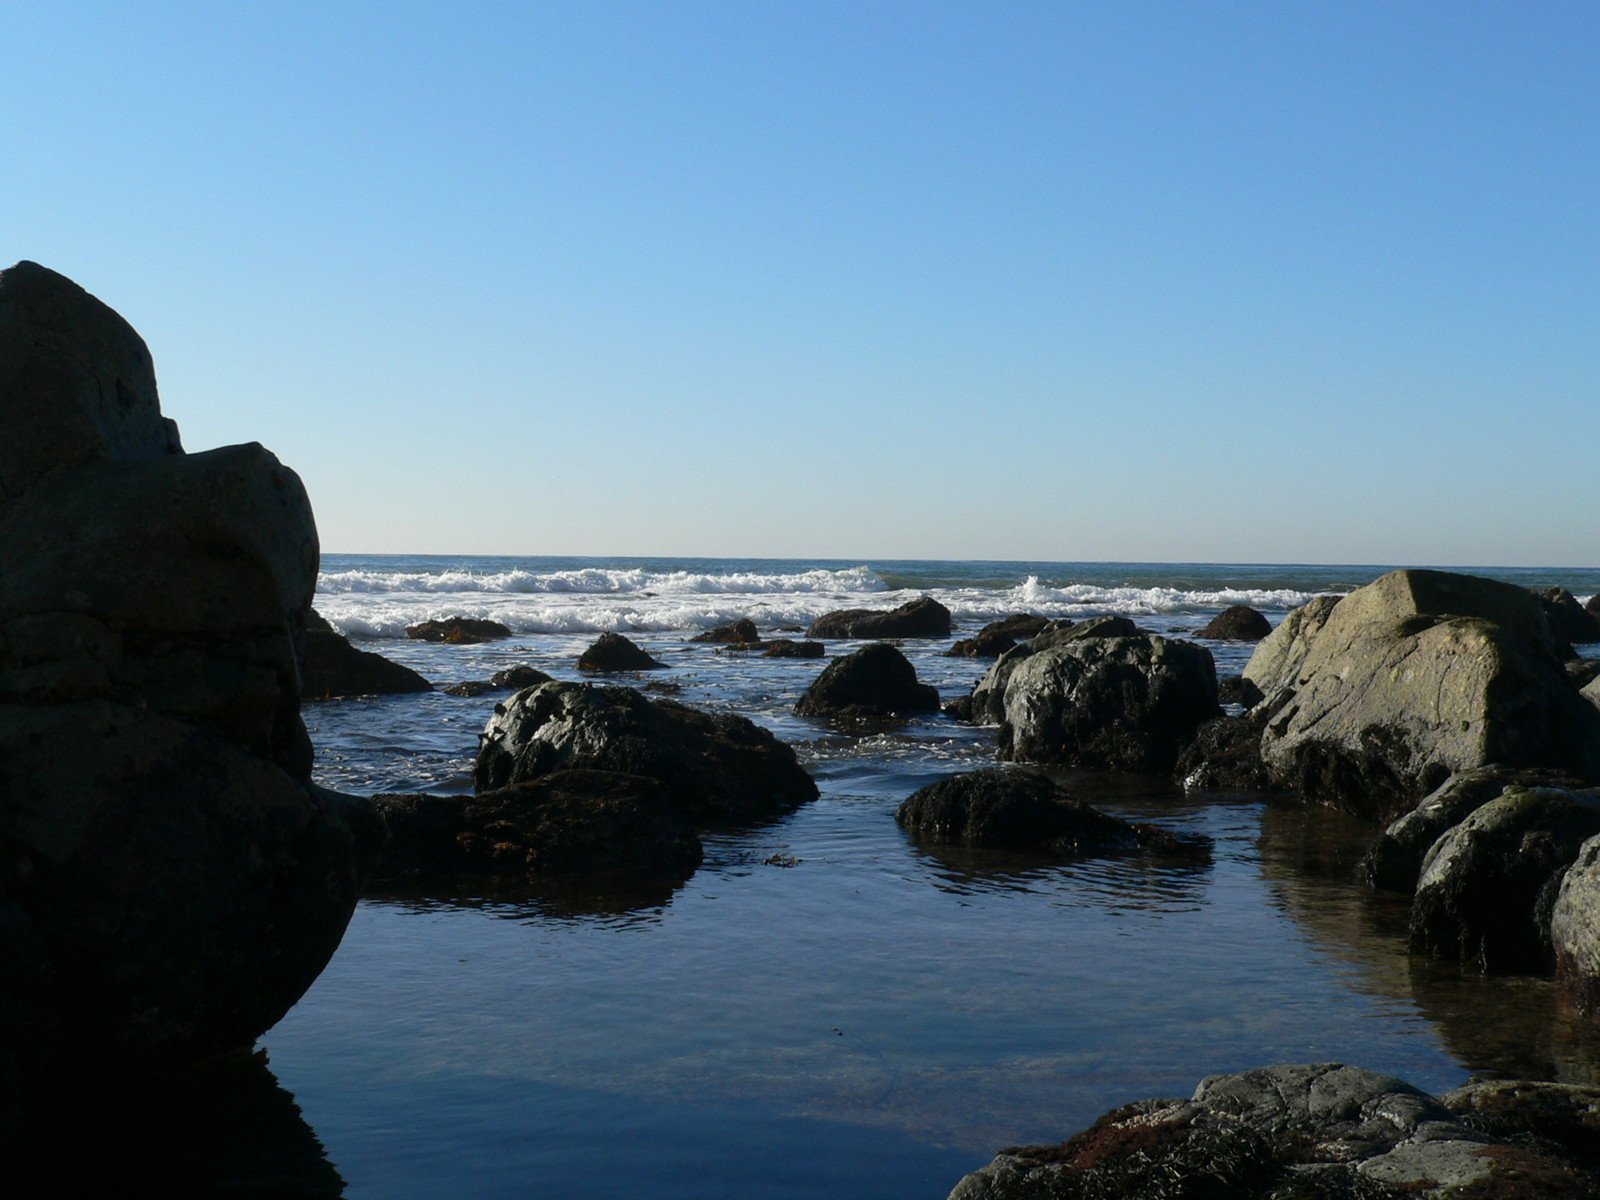 a beach with many large rocks near the ocean